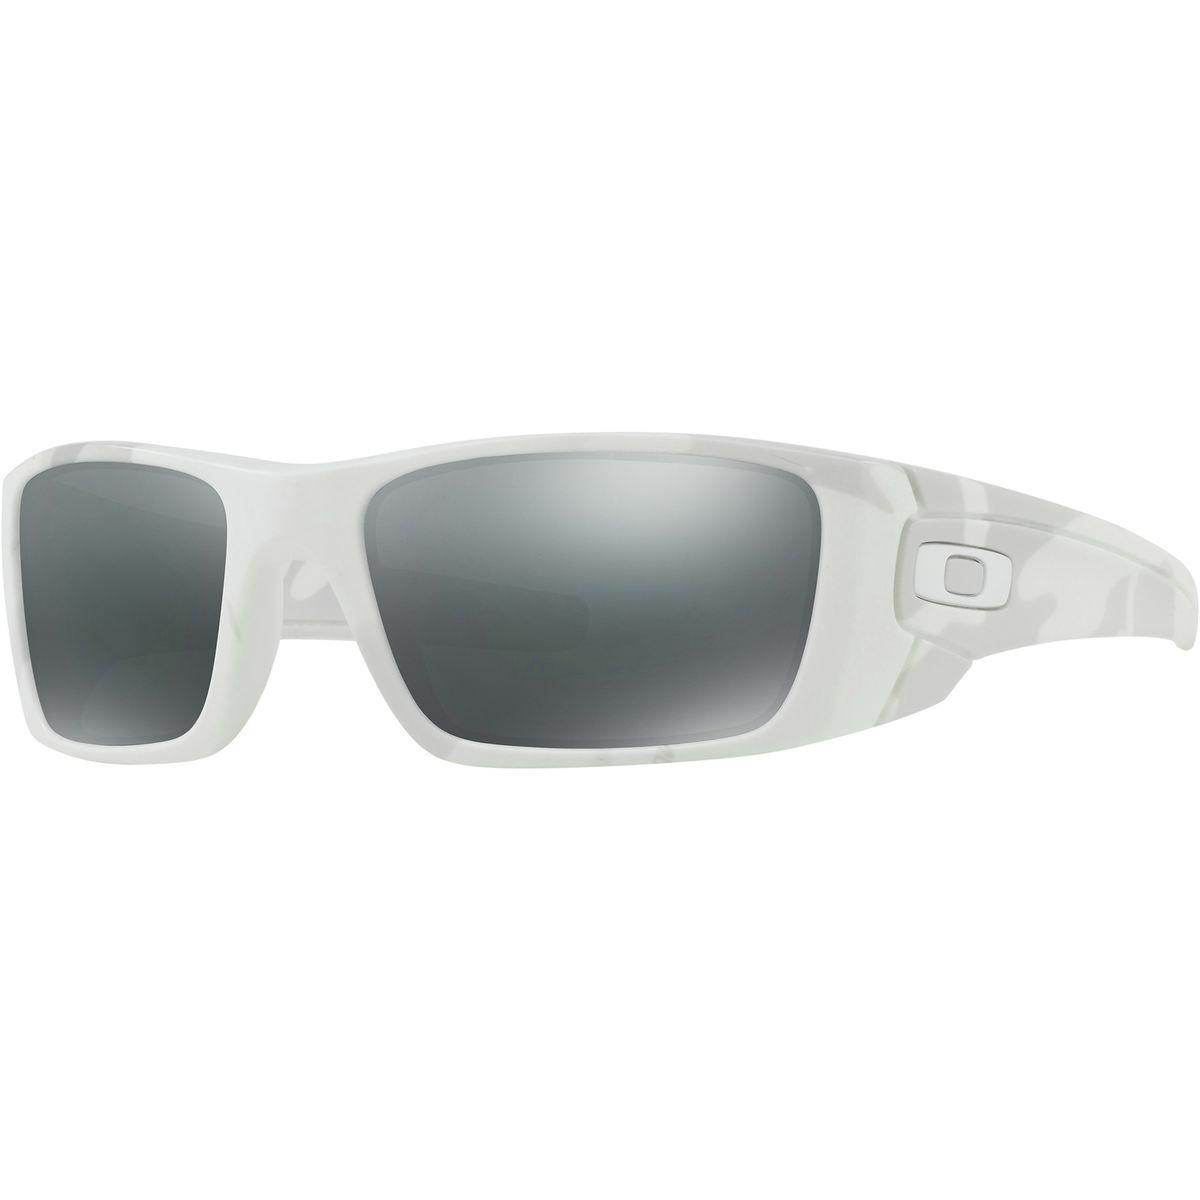 Oakley Fuel Cell Sunglasses in White for Men - Lyst